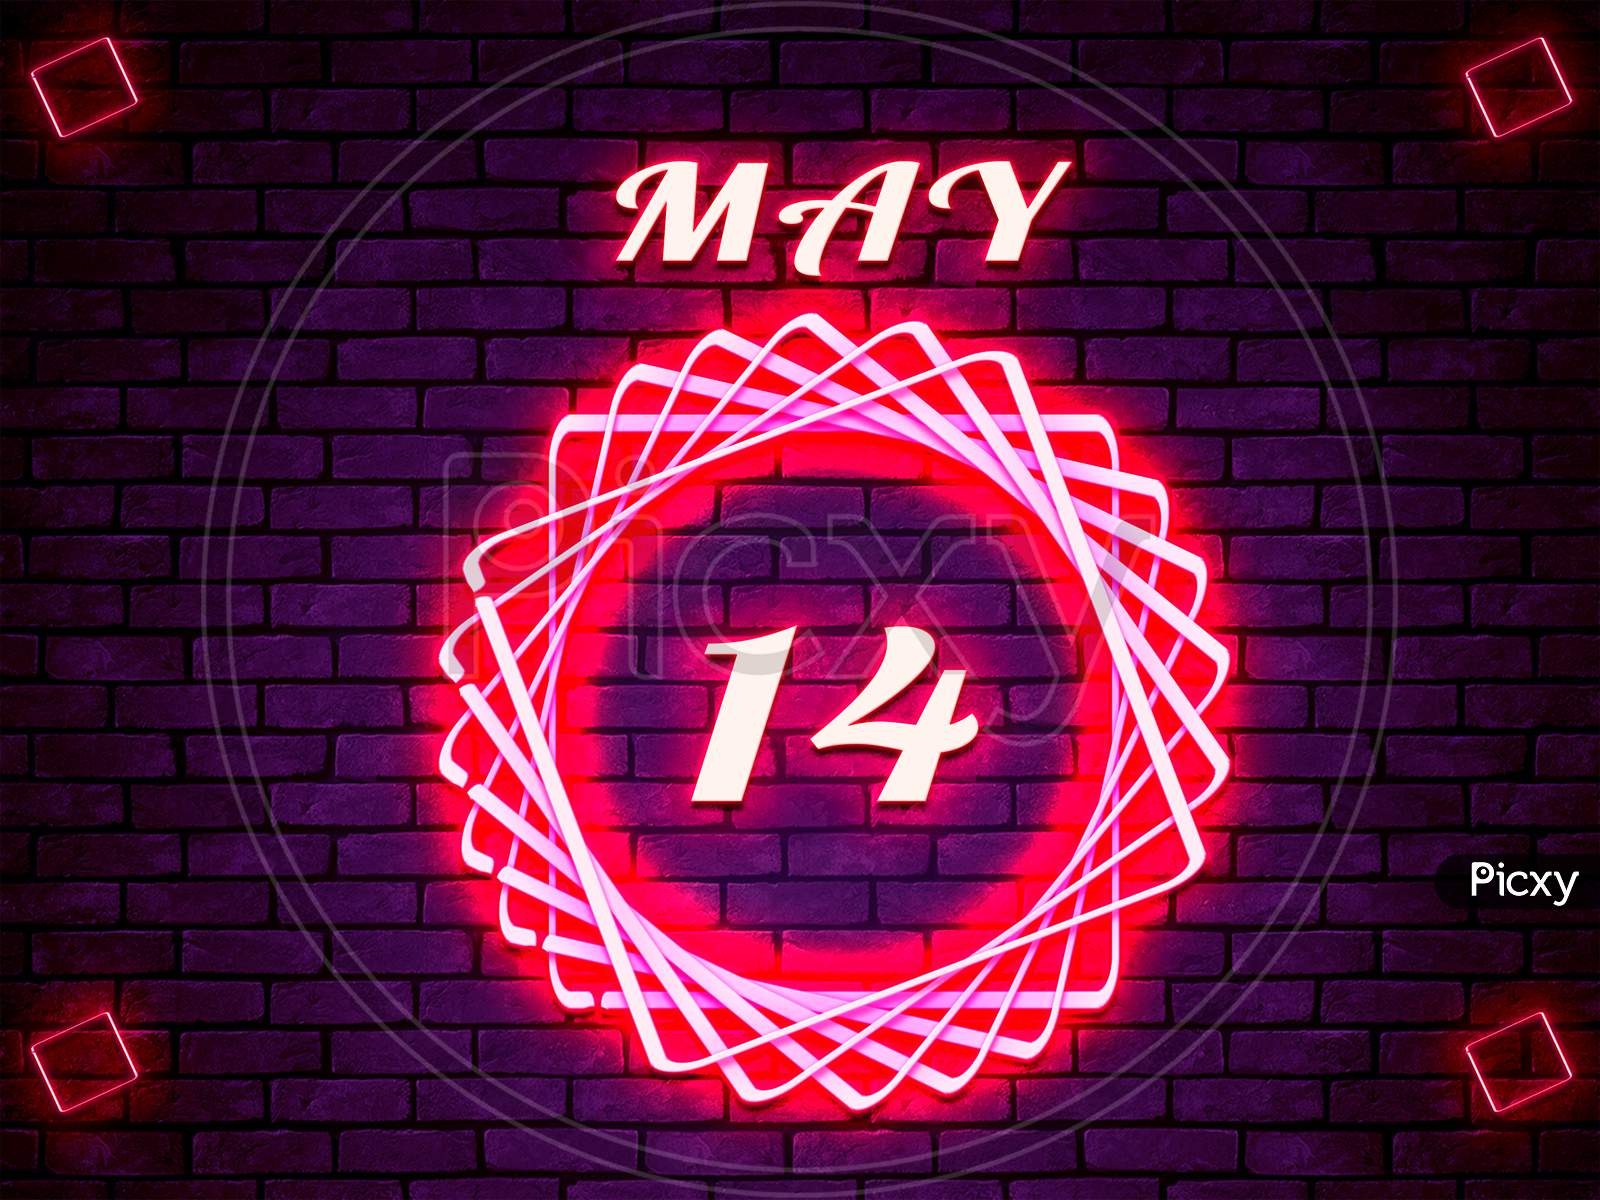 14 May, Monthly Calendar On Bricks Background